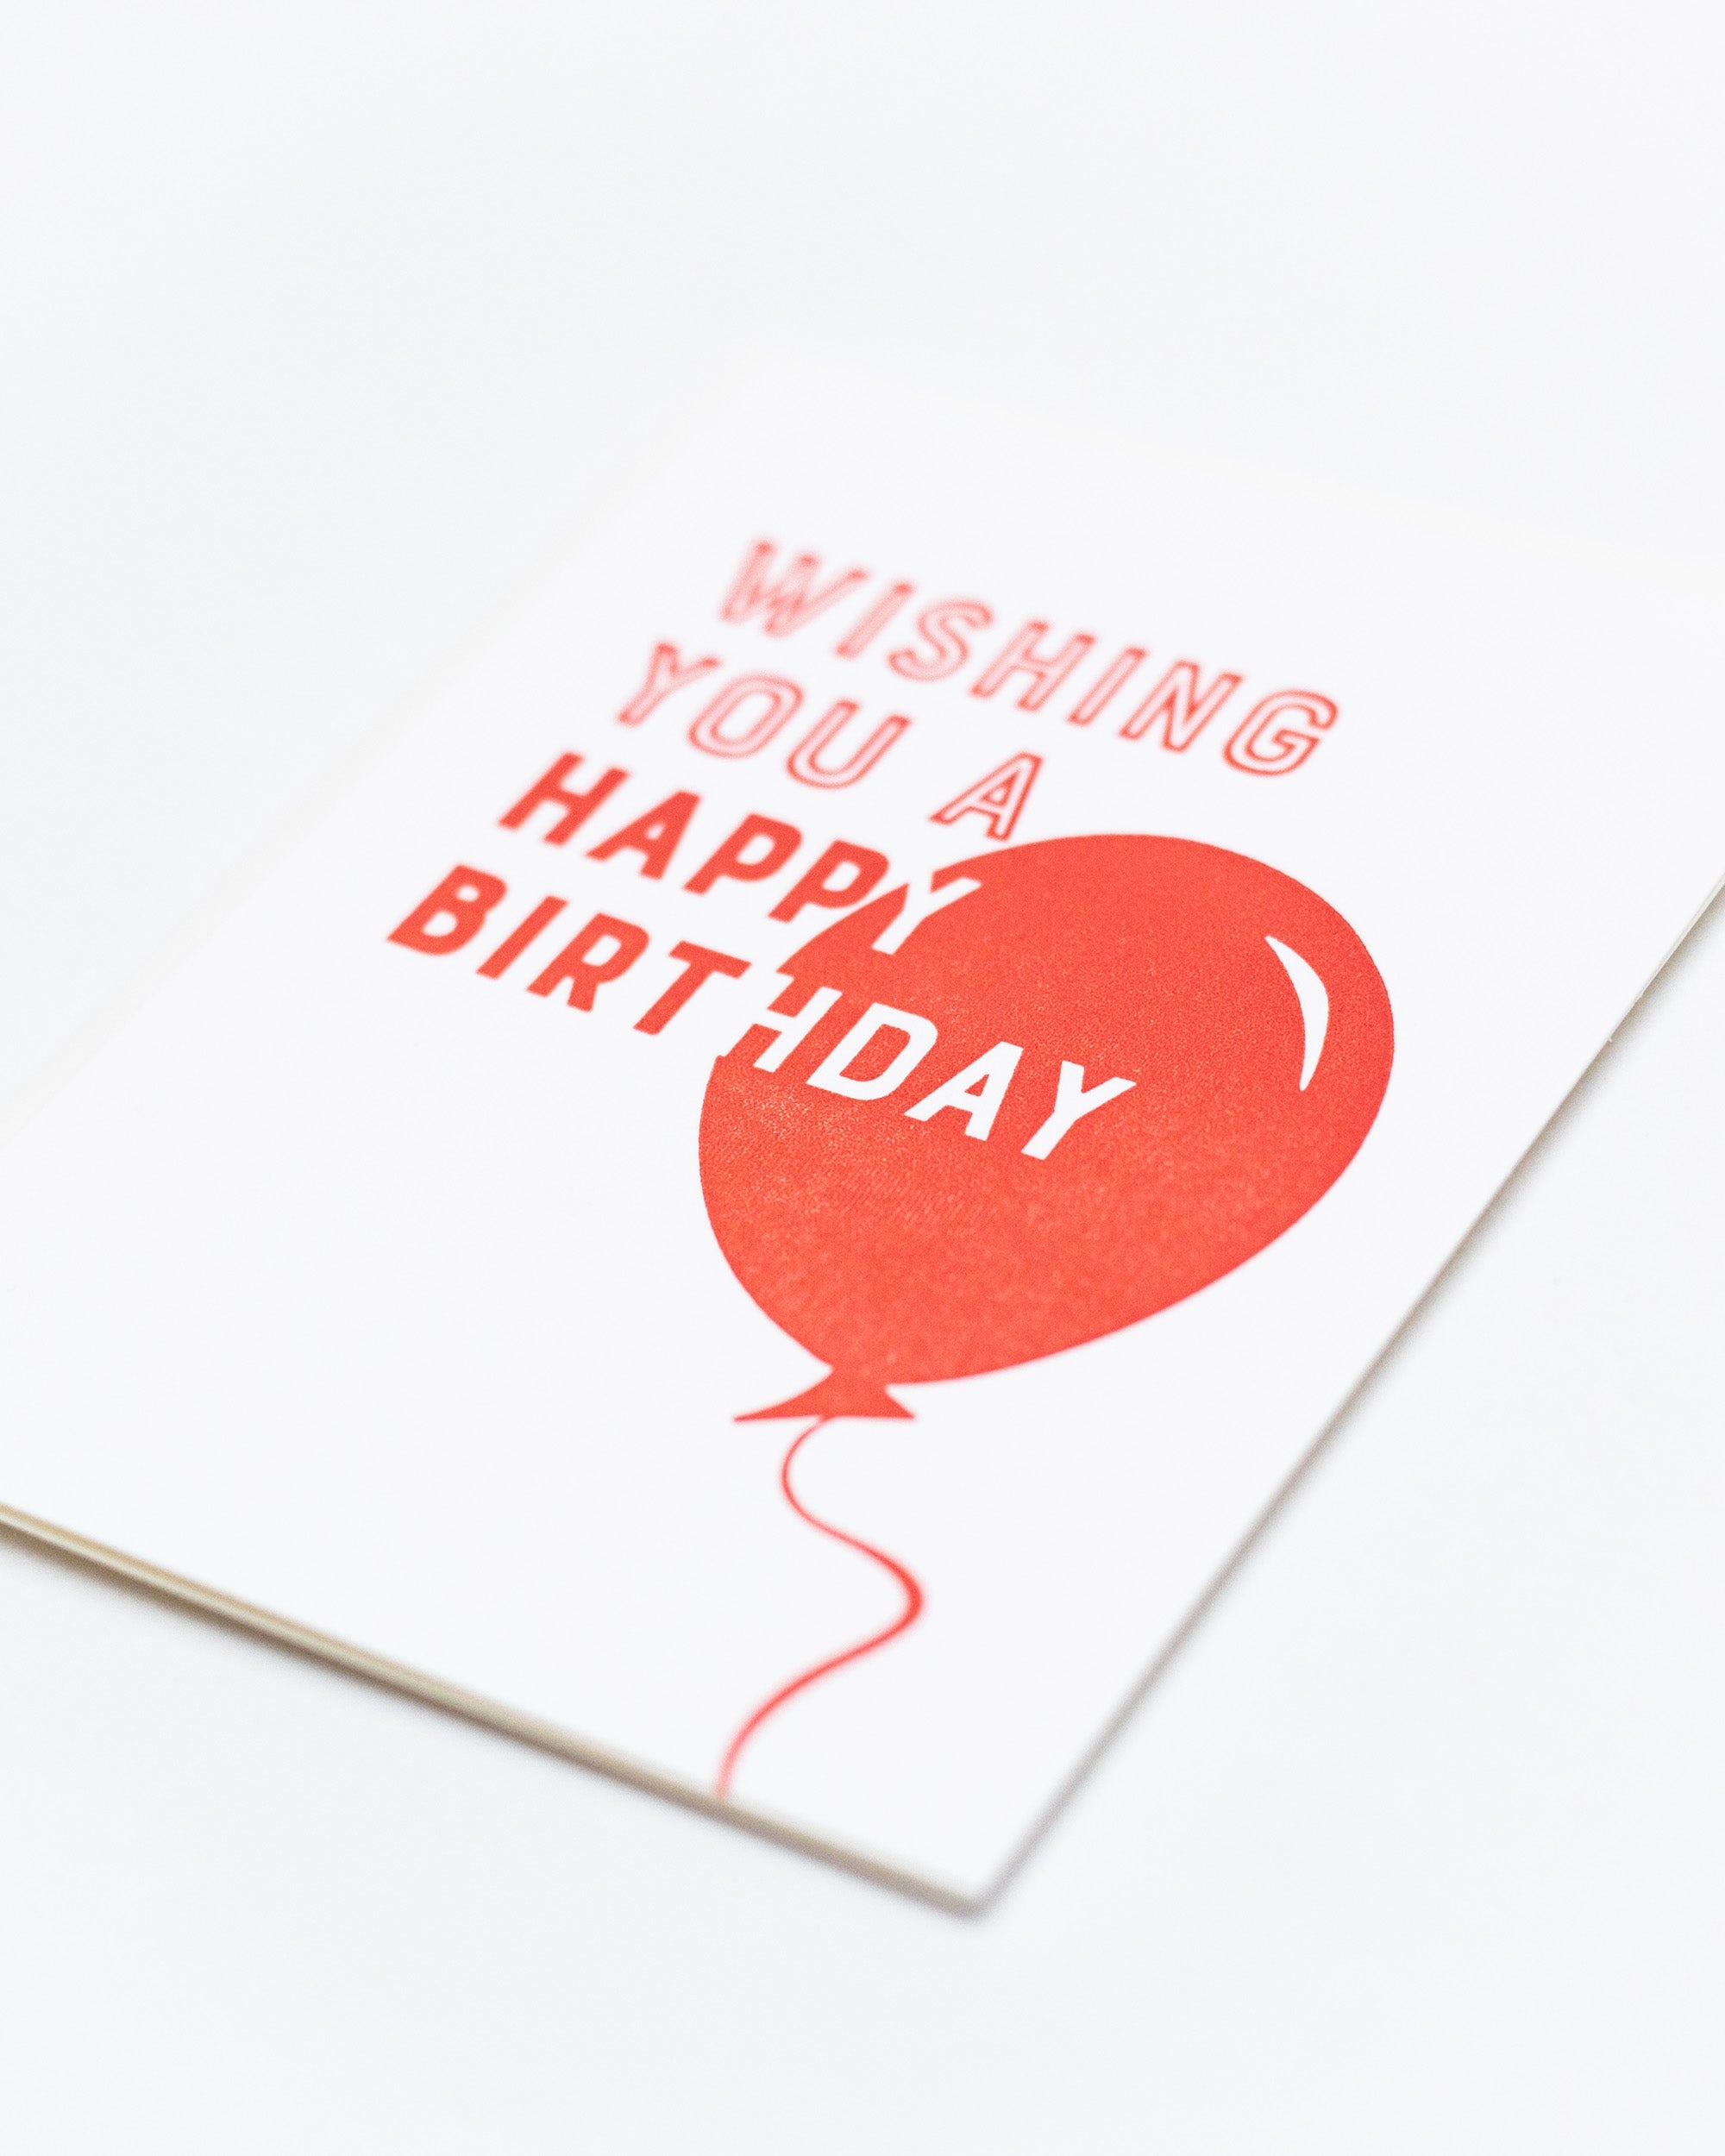 Wishing You a Happy Birthday Card